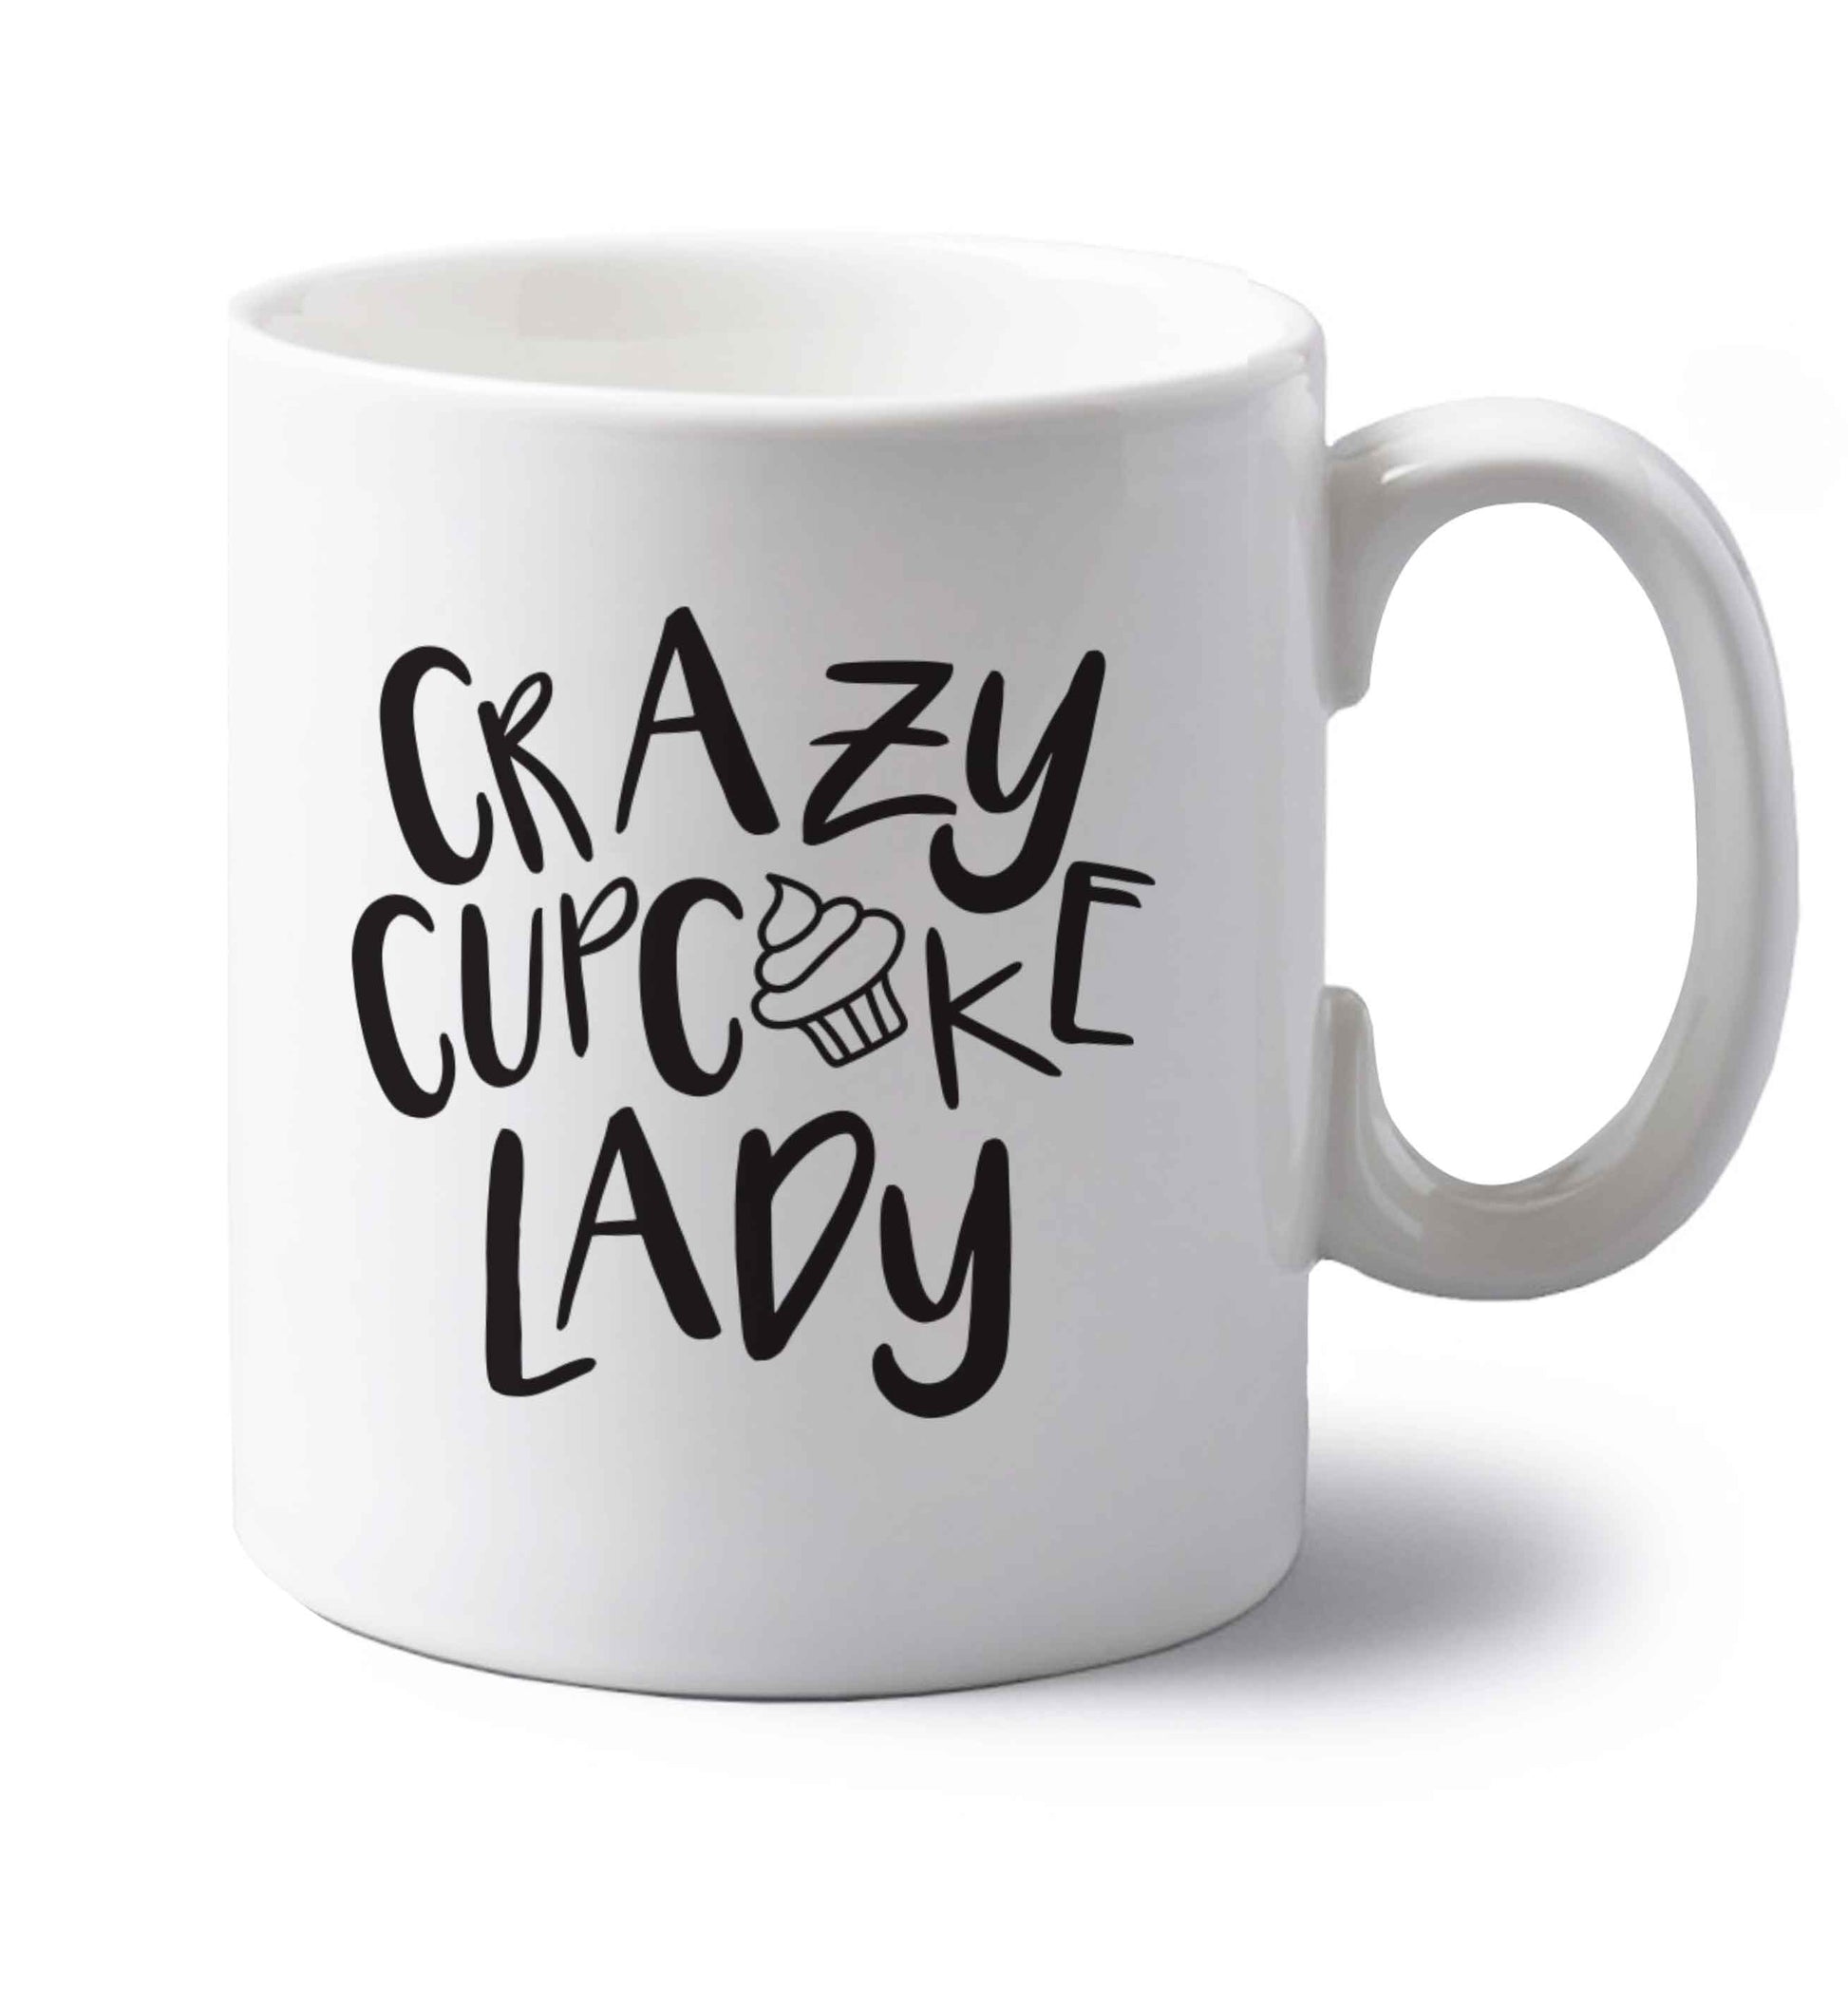 Crazy cupcake lady left handed white ceramic mug 